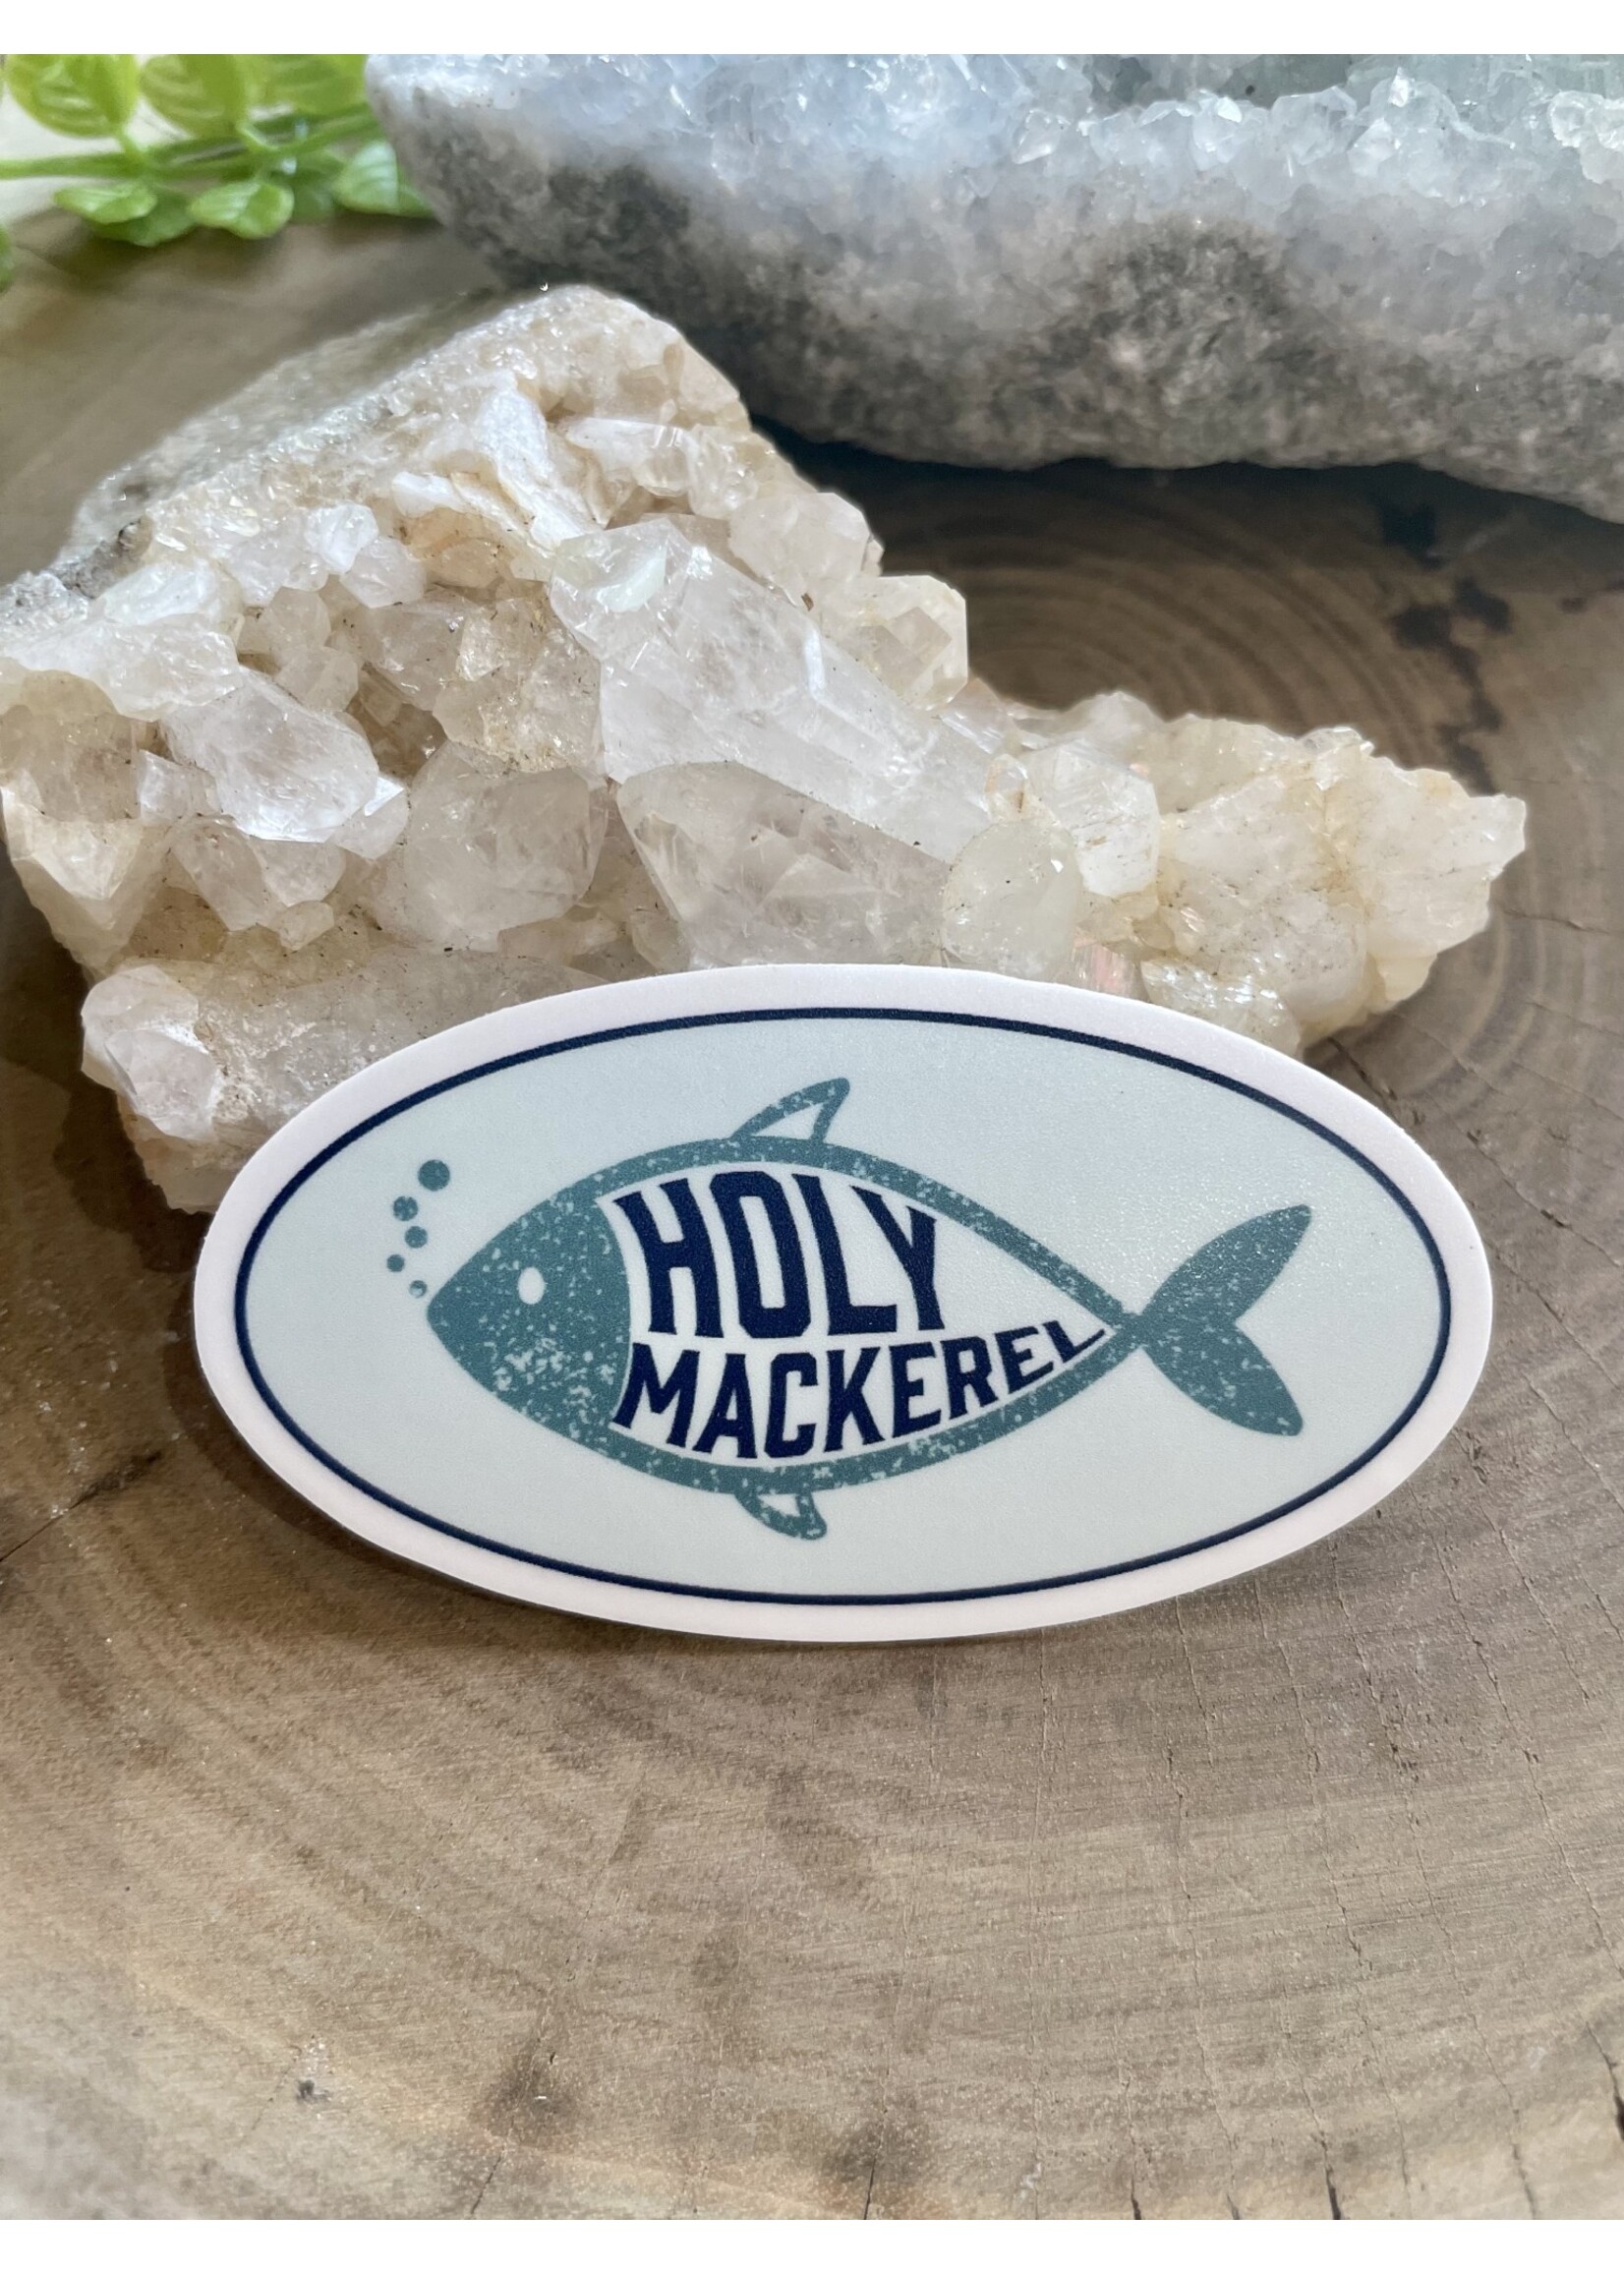 Tangled Up In Hue Sticker - holy mackerel